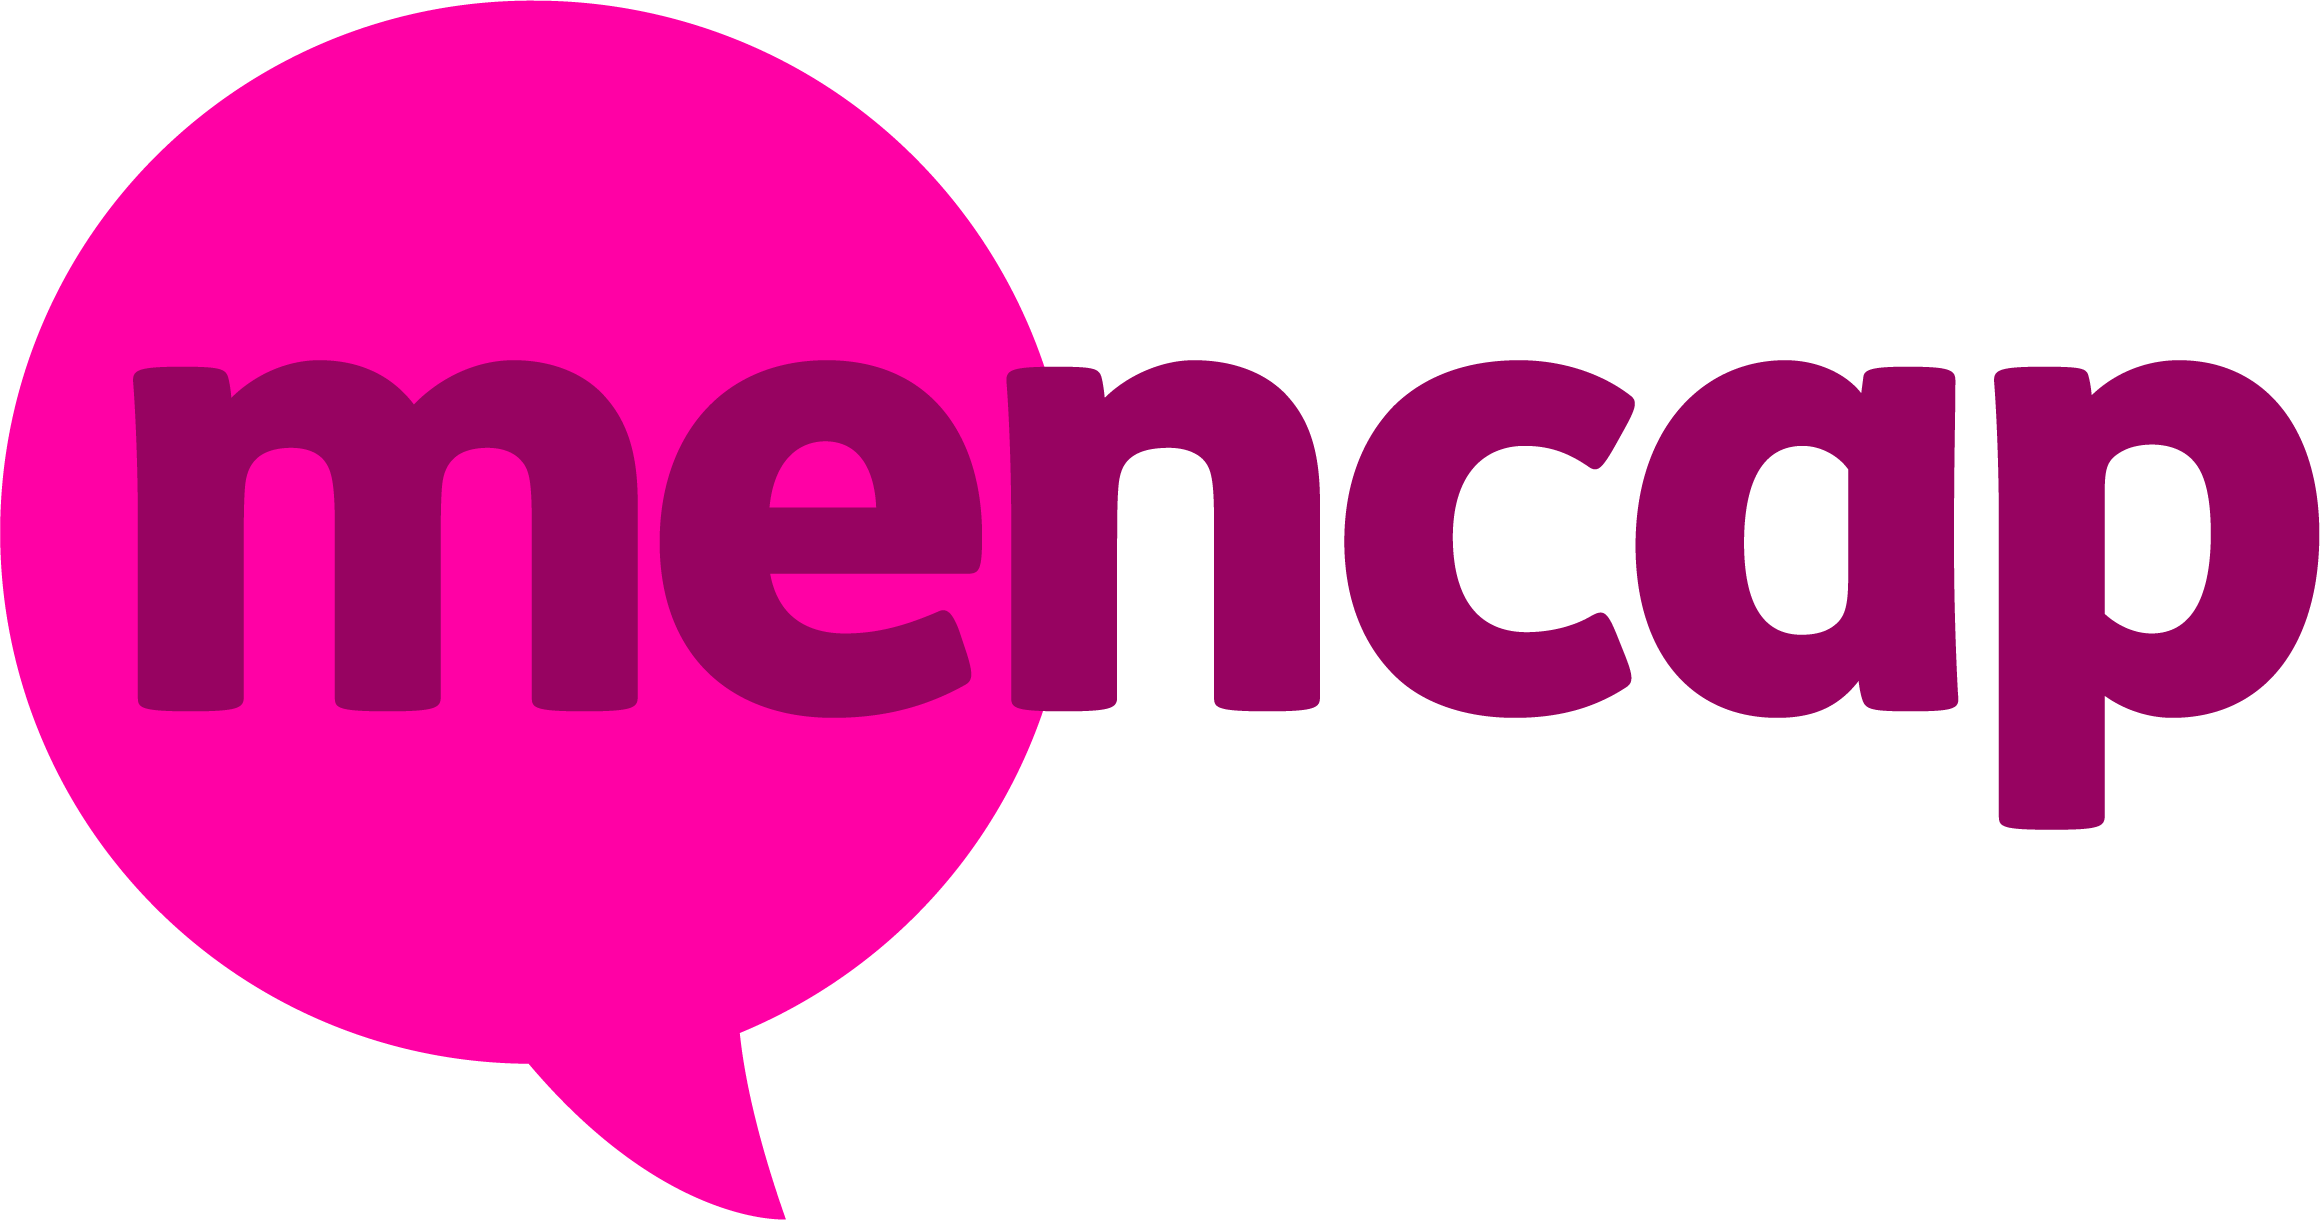 The Mencap logo